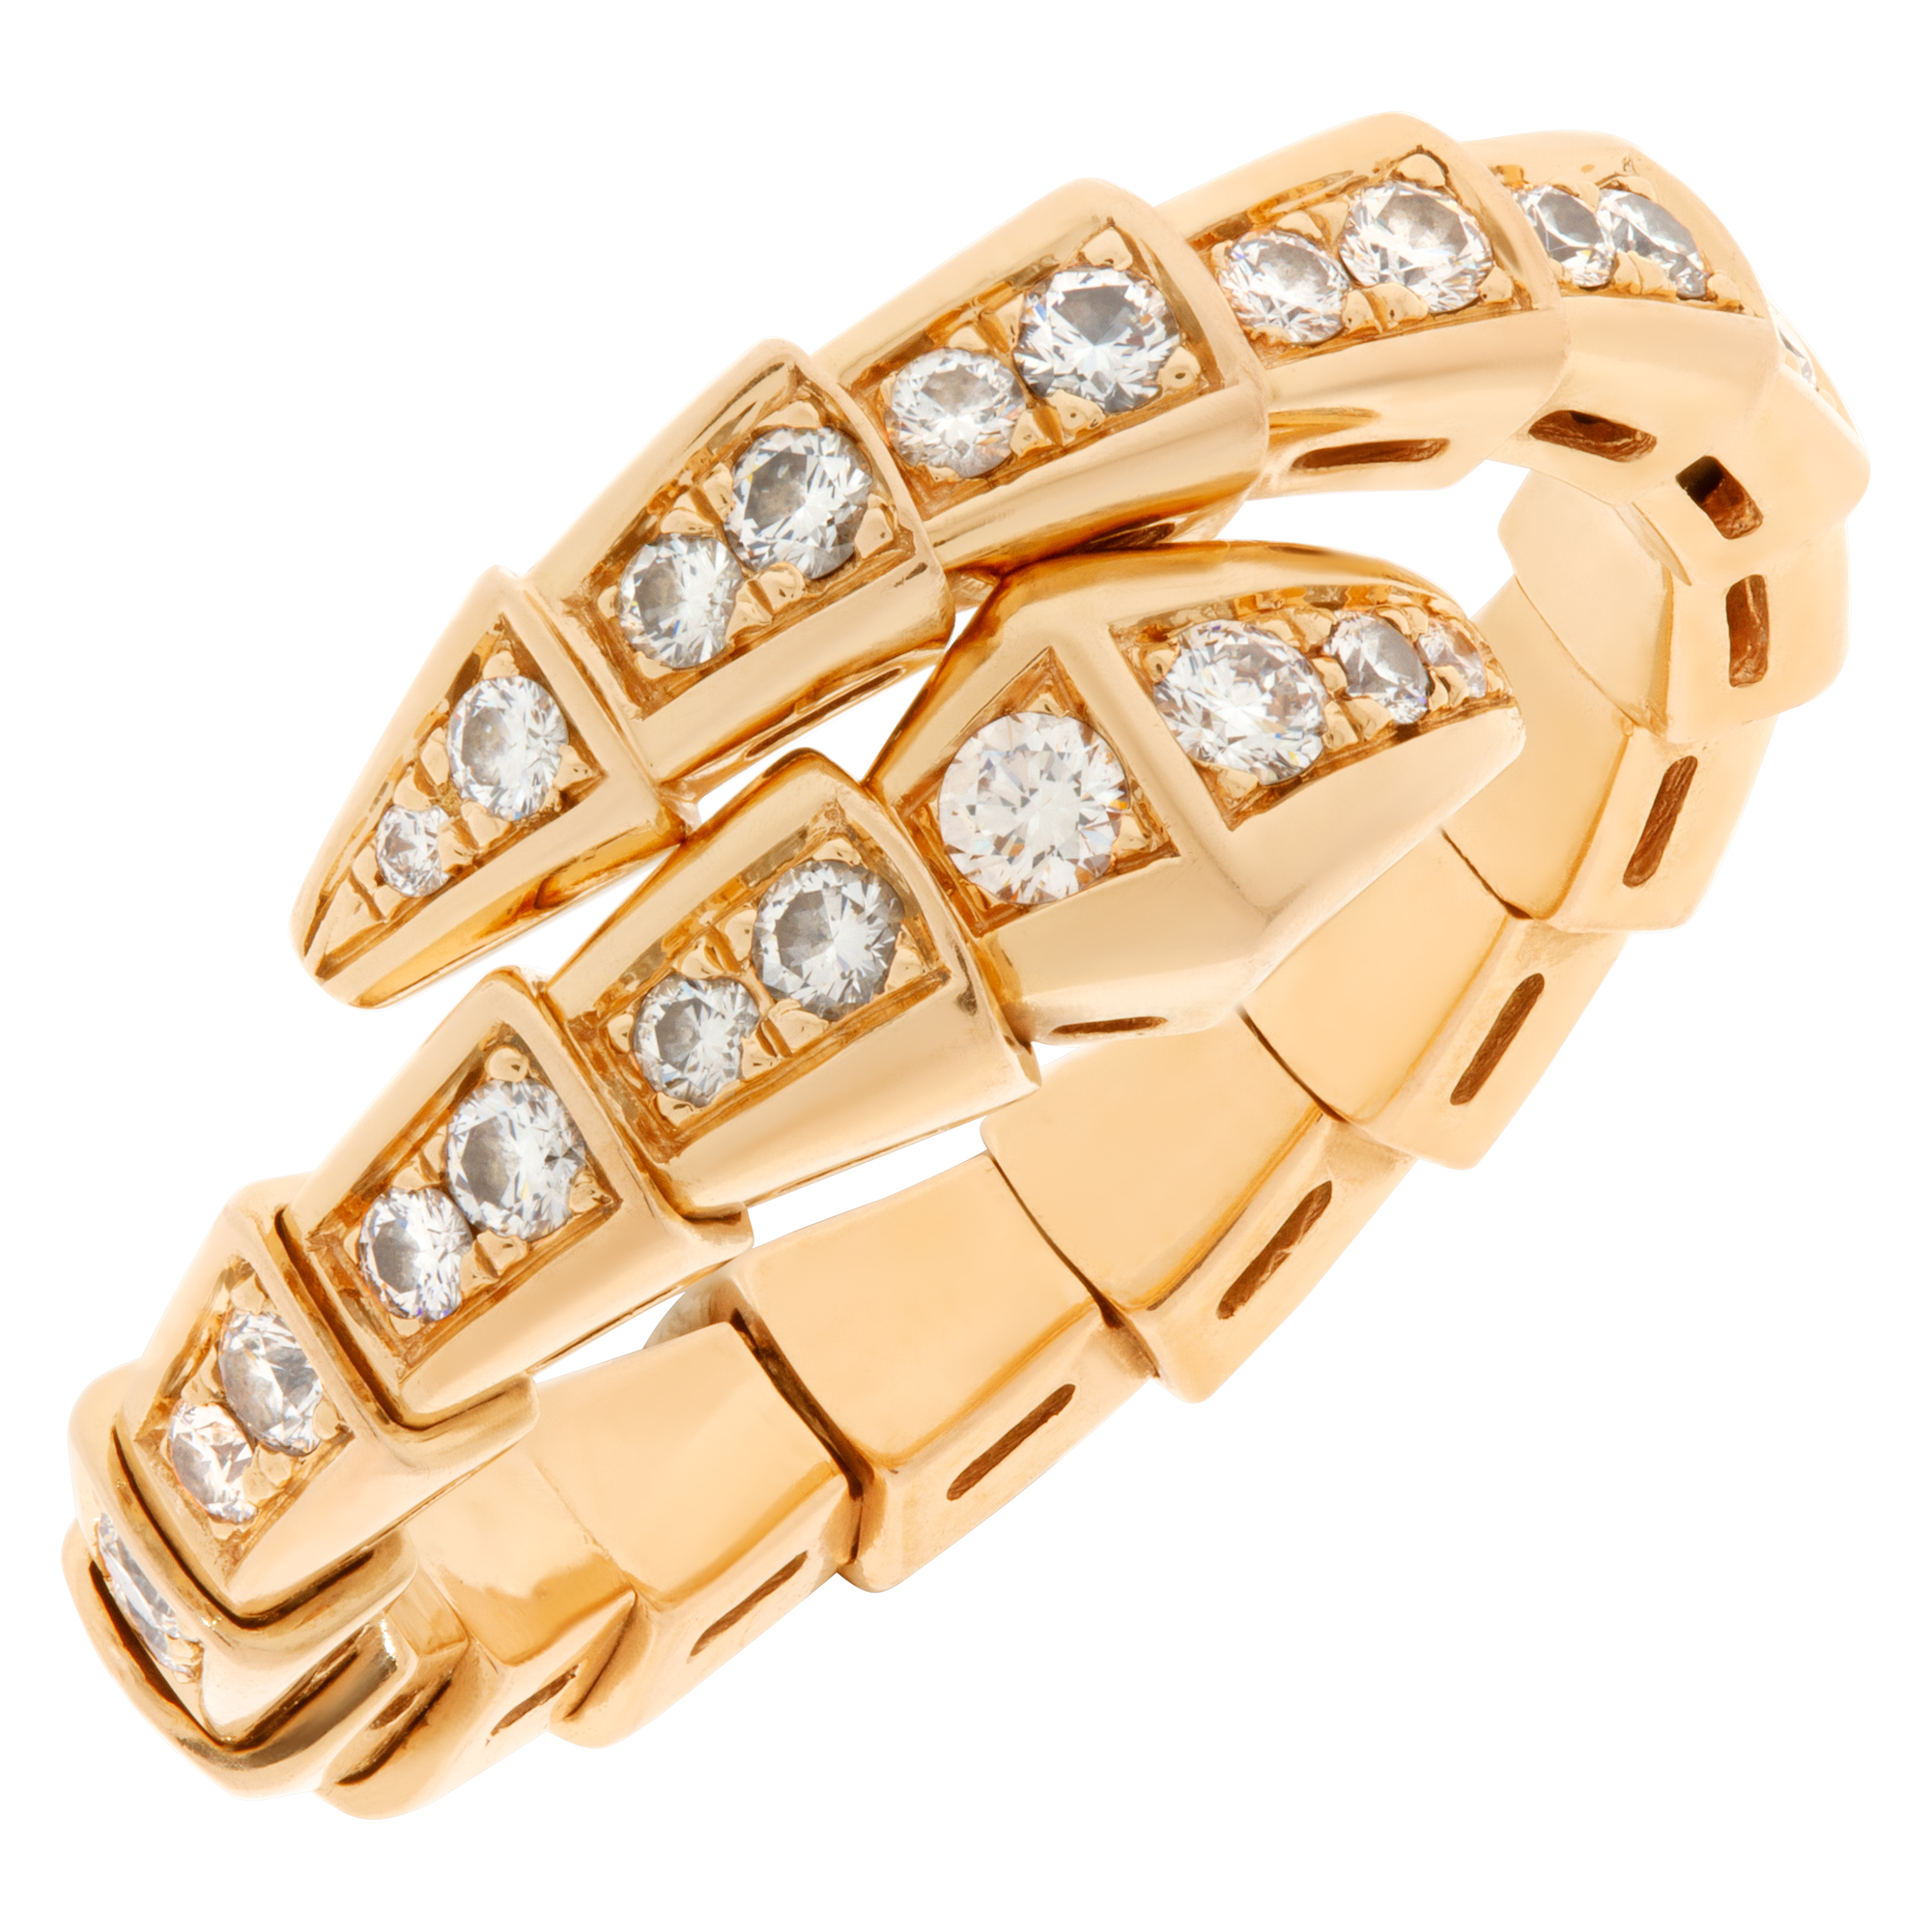 Bvlgari Serpenti Viper Ring in 18k rose gold and diamonds image 3